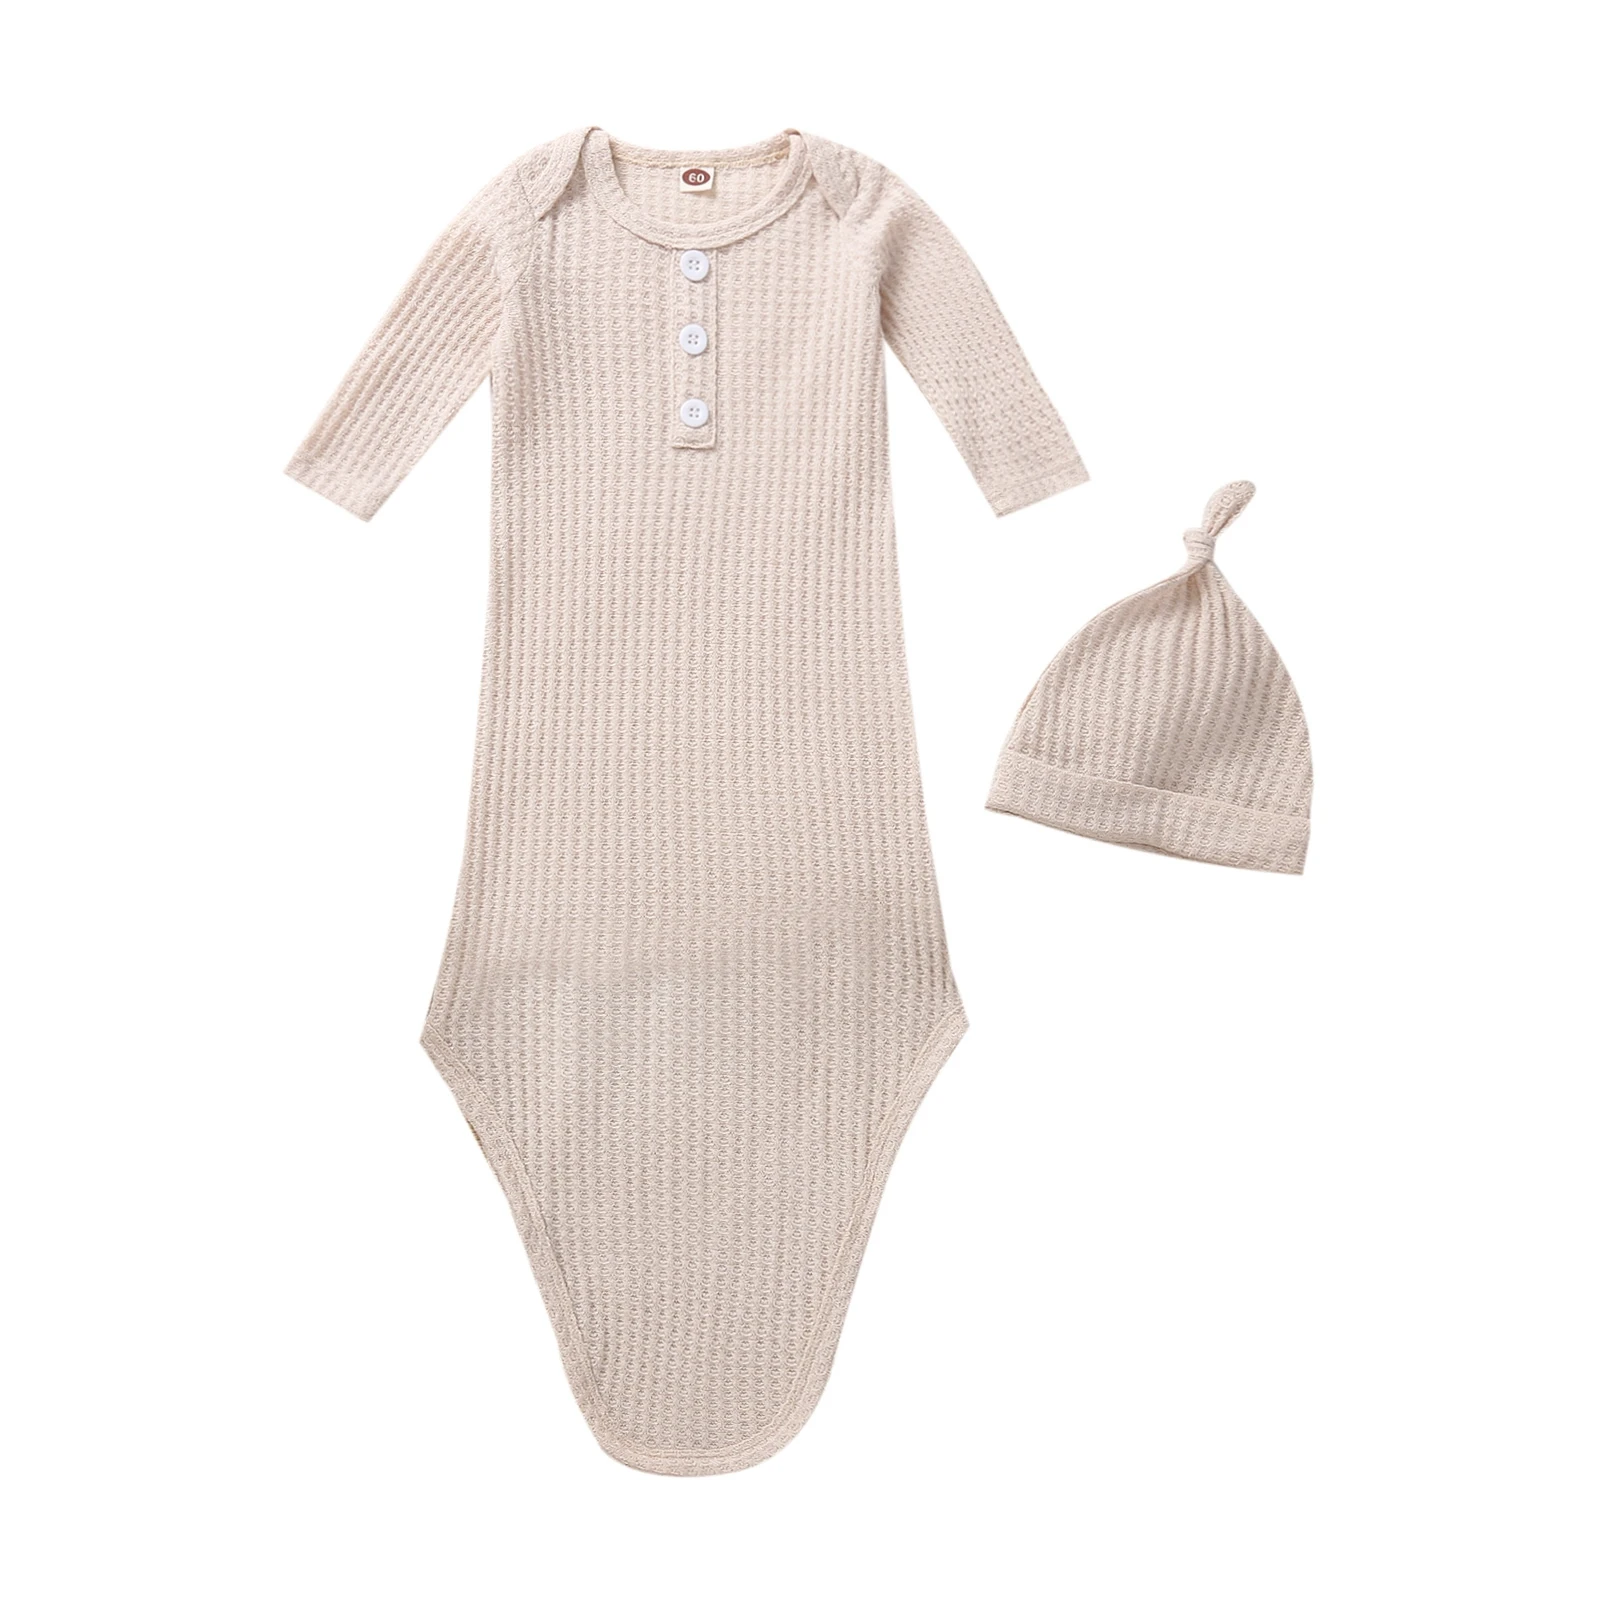 WALLARENEAR Nebworn Infant Baby Girl Boy Knitted Sleepwear Nightgown with Hat One-Piece Pajamas 0-12 Months 